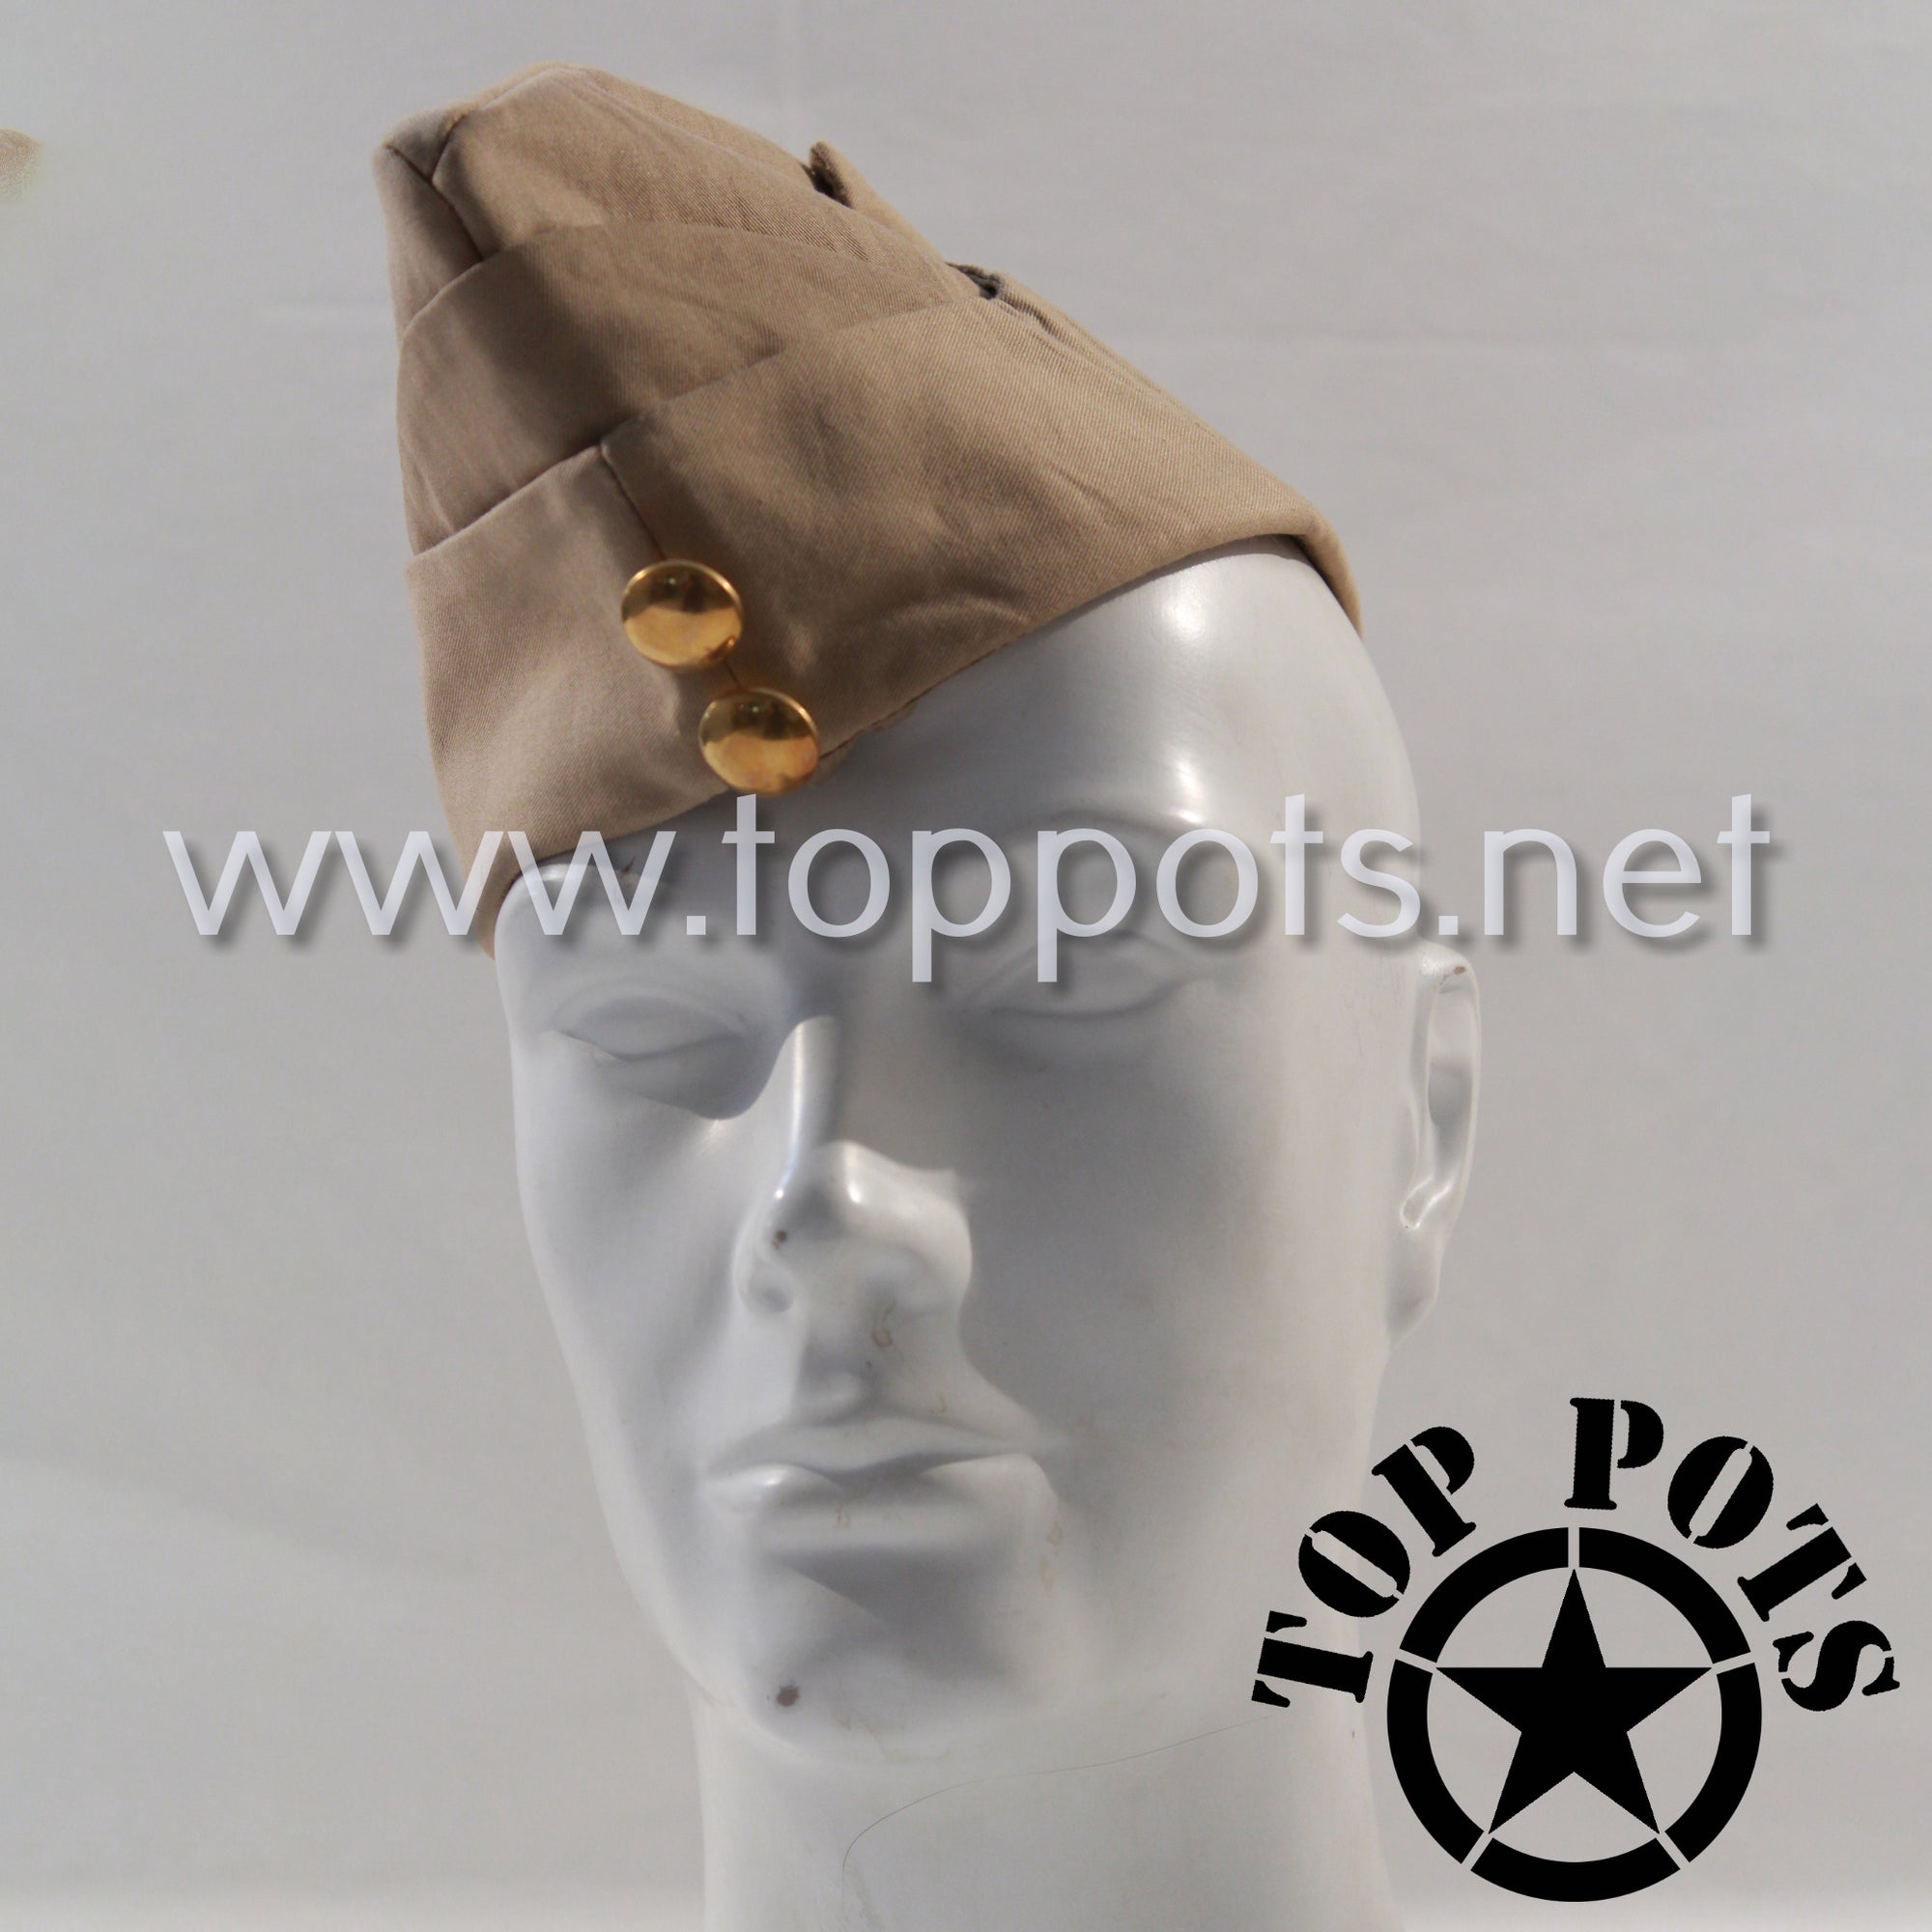 Featured Uniform - Reproduction WWII British Army Uniform Khaki Drill Cotton Field Service Cap (Costume Grade)